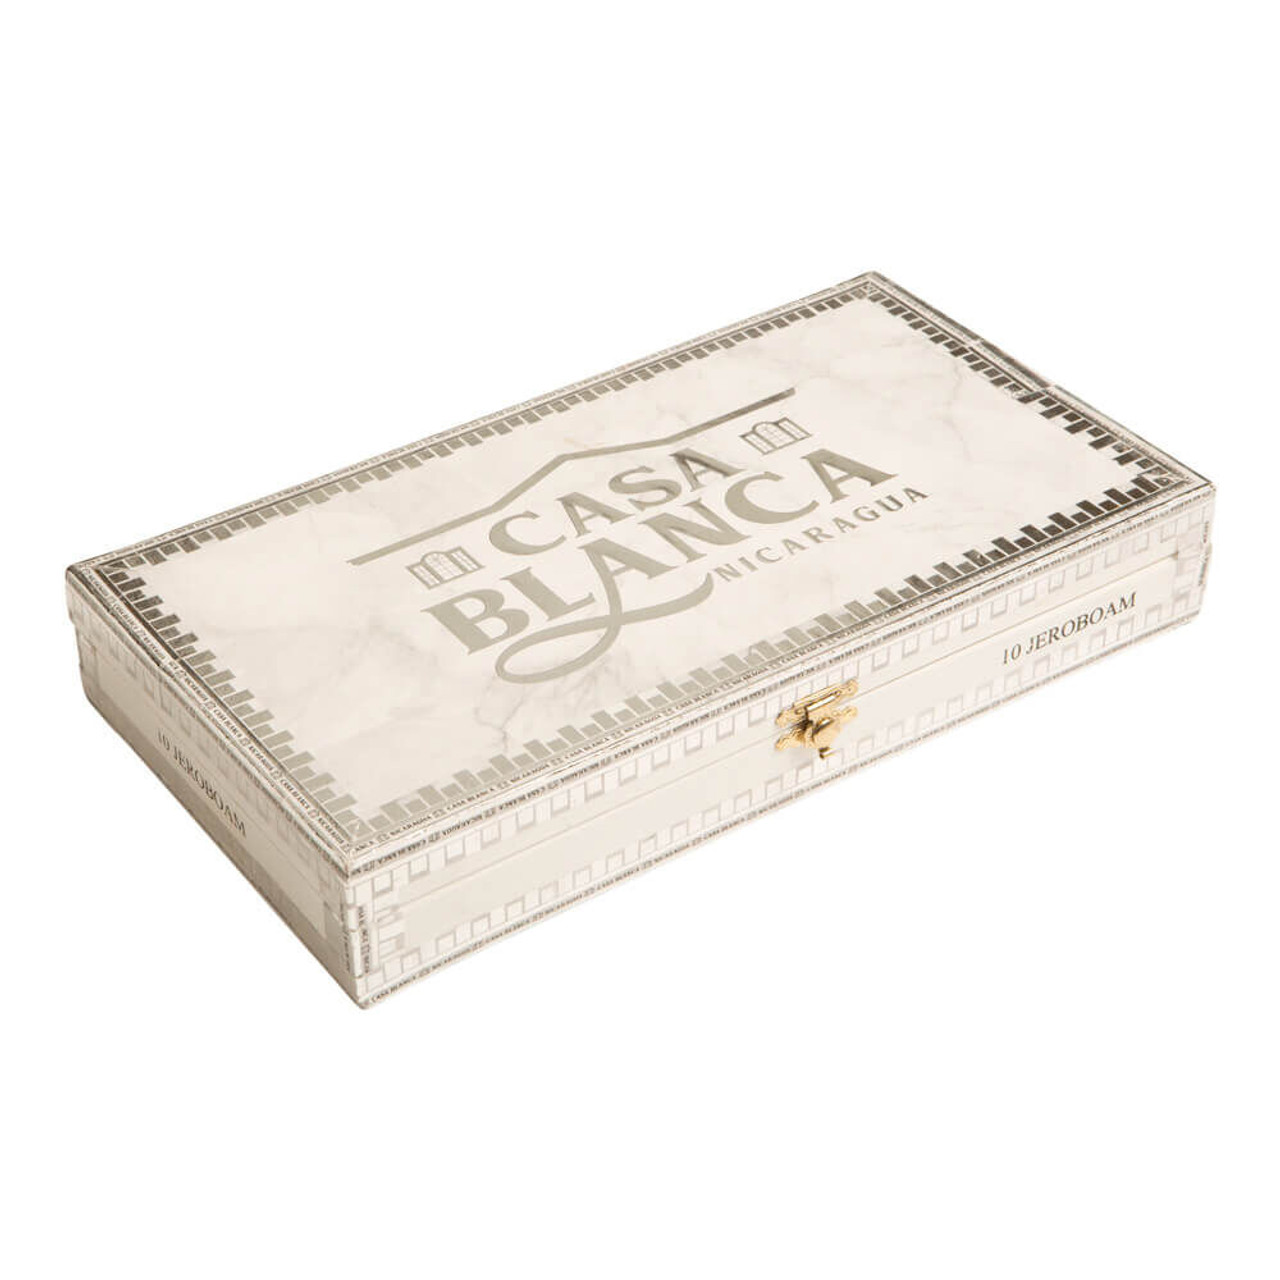 Casa Blanca Nicaragua De Luxe Maduro Cigars - 6 x 50 (Box of 20) *Box